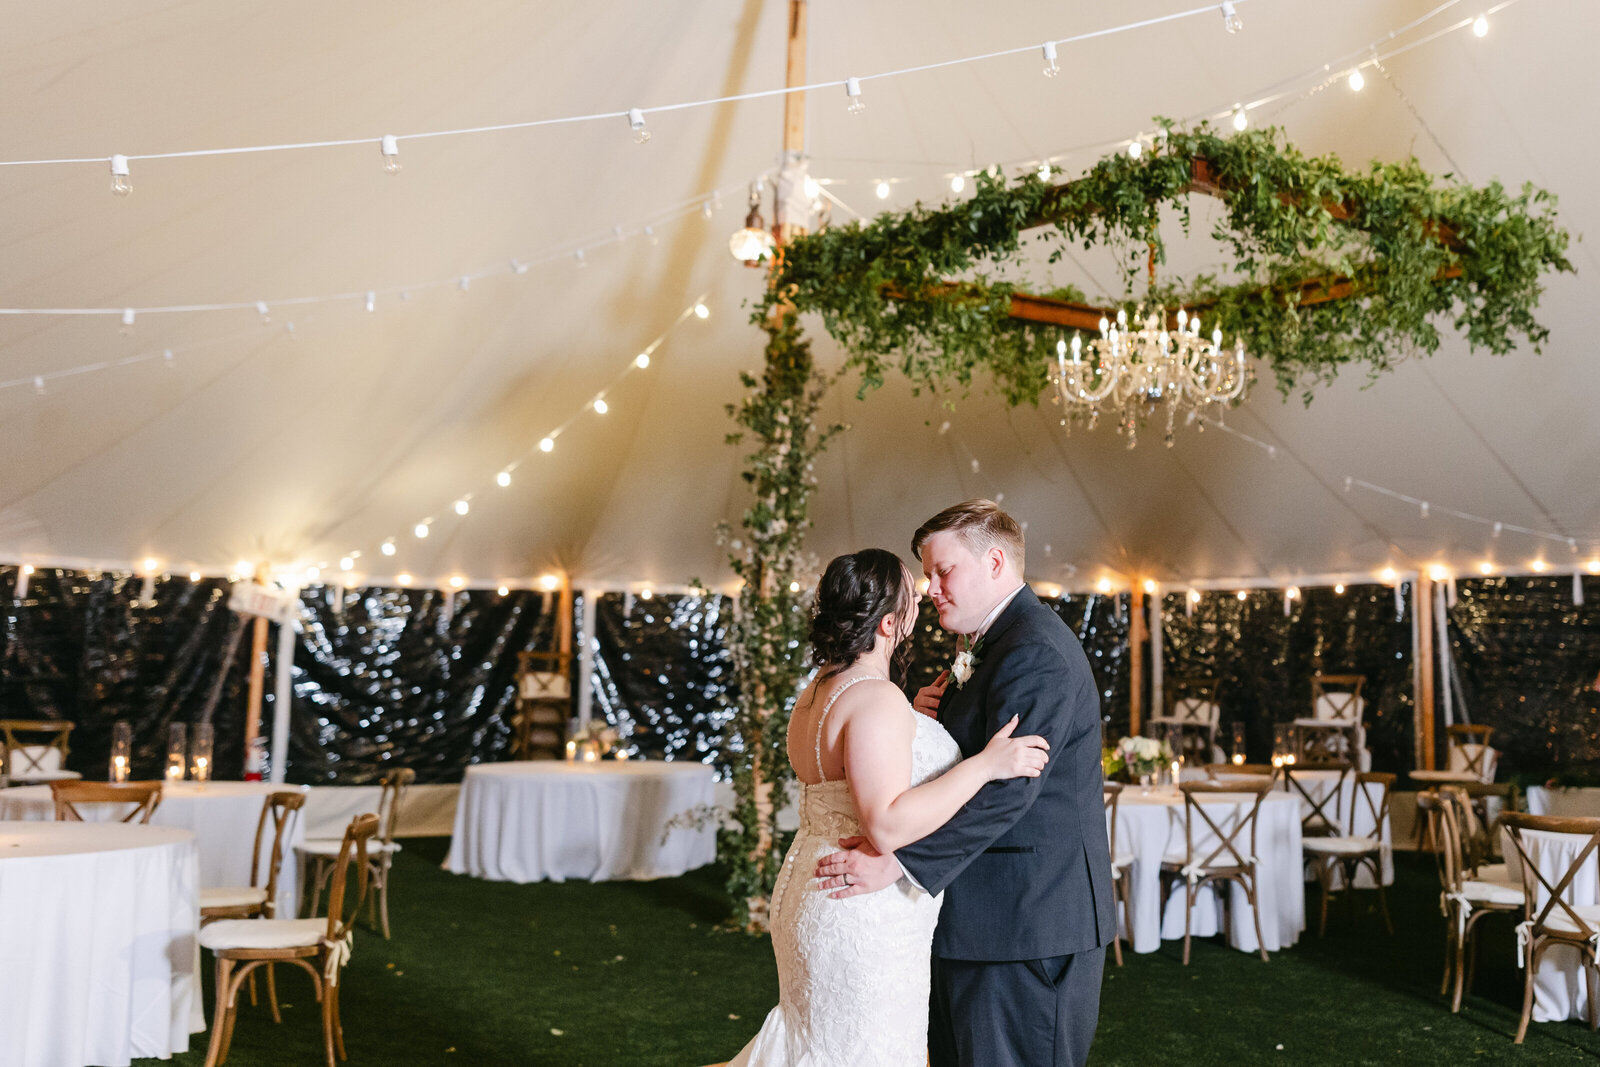 Stone-Acres-Farm-wedding-draping-chandelier-7